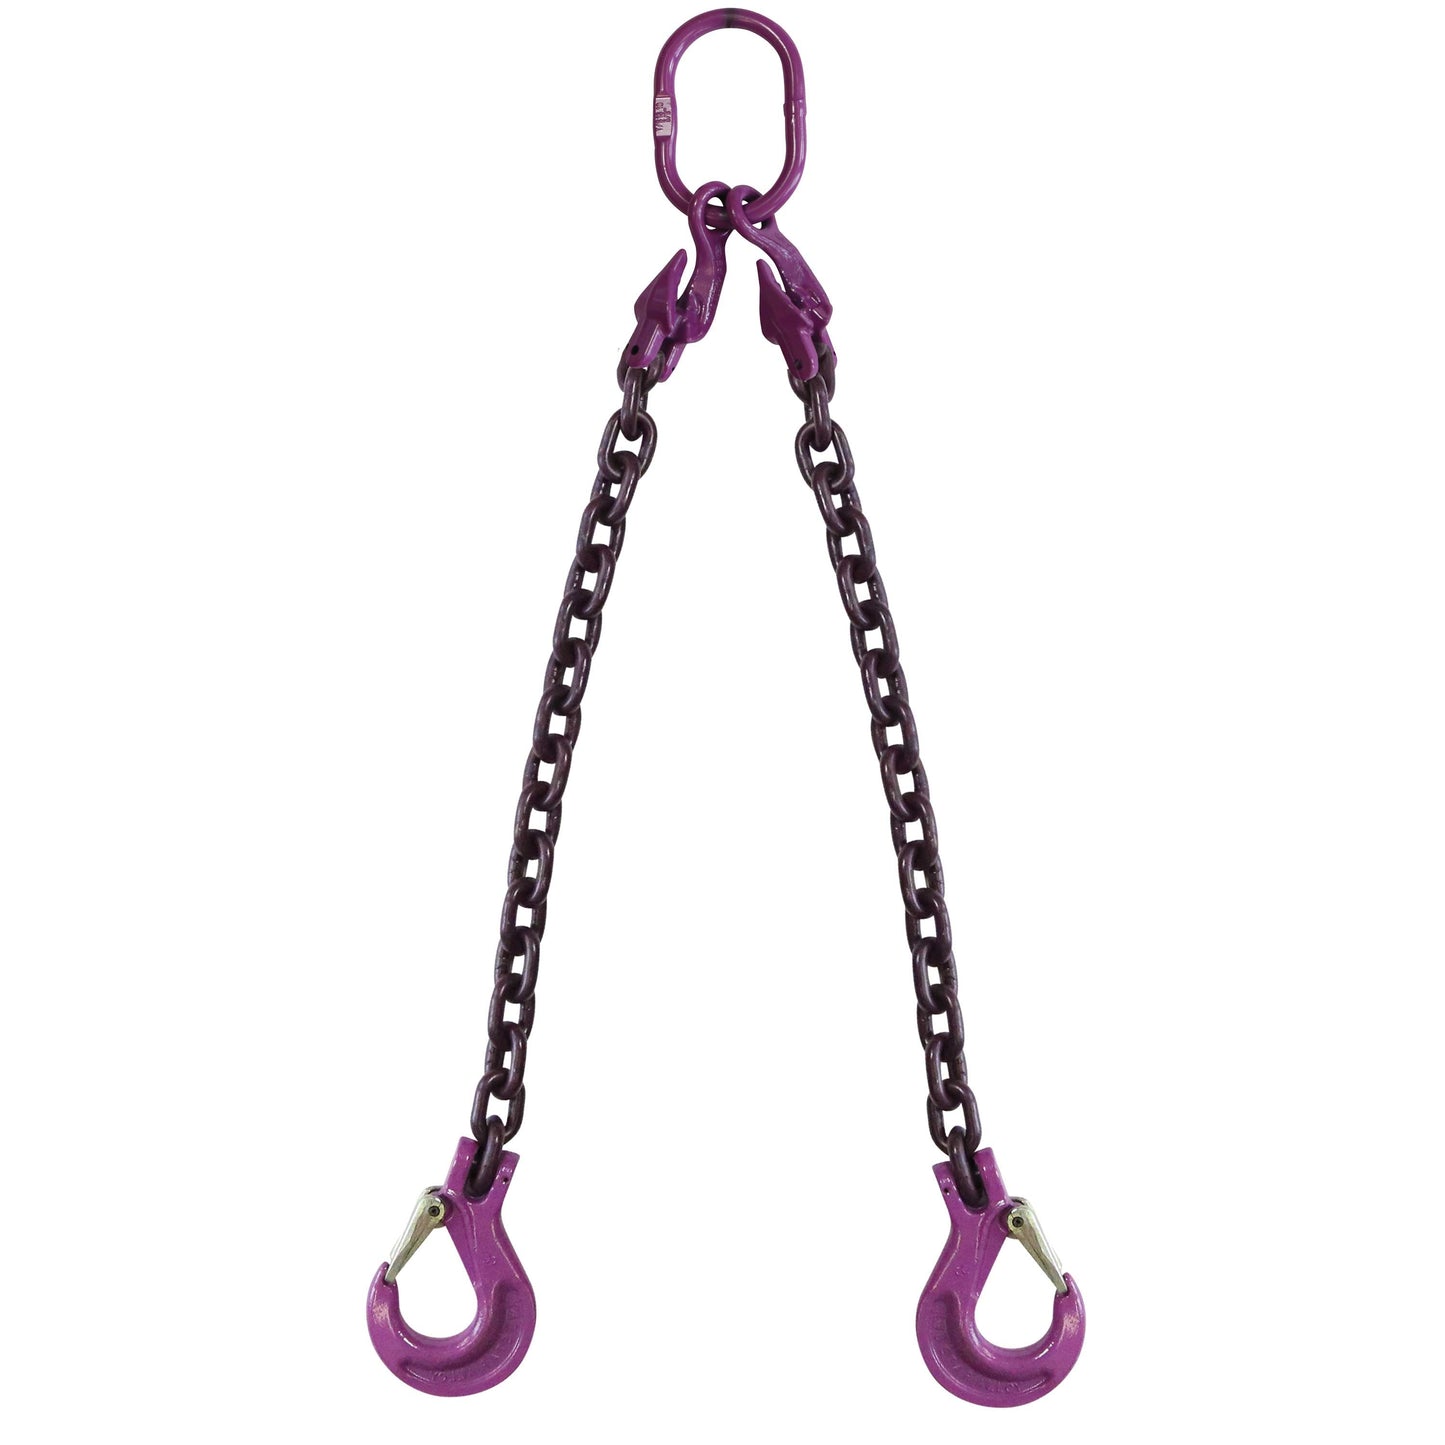 3/8" x 20' - Adjustable 2 Leg Chain Sling w/ Sling Hooks - Grade 100 image 1 of 8